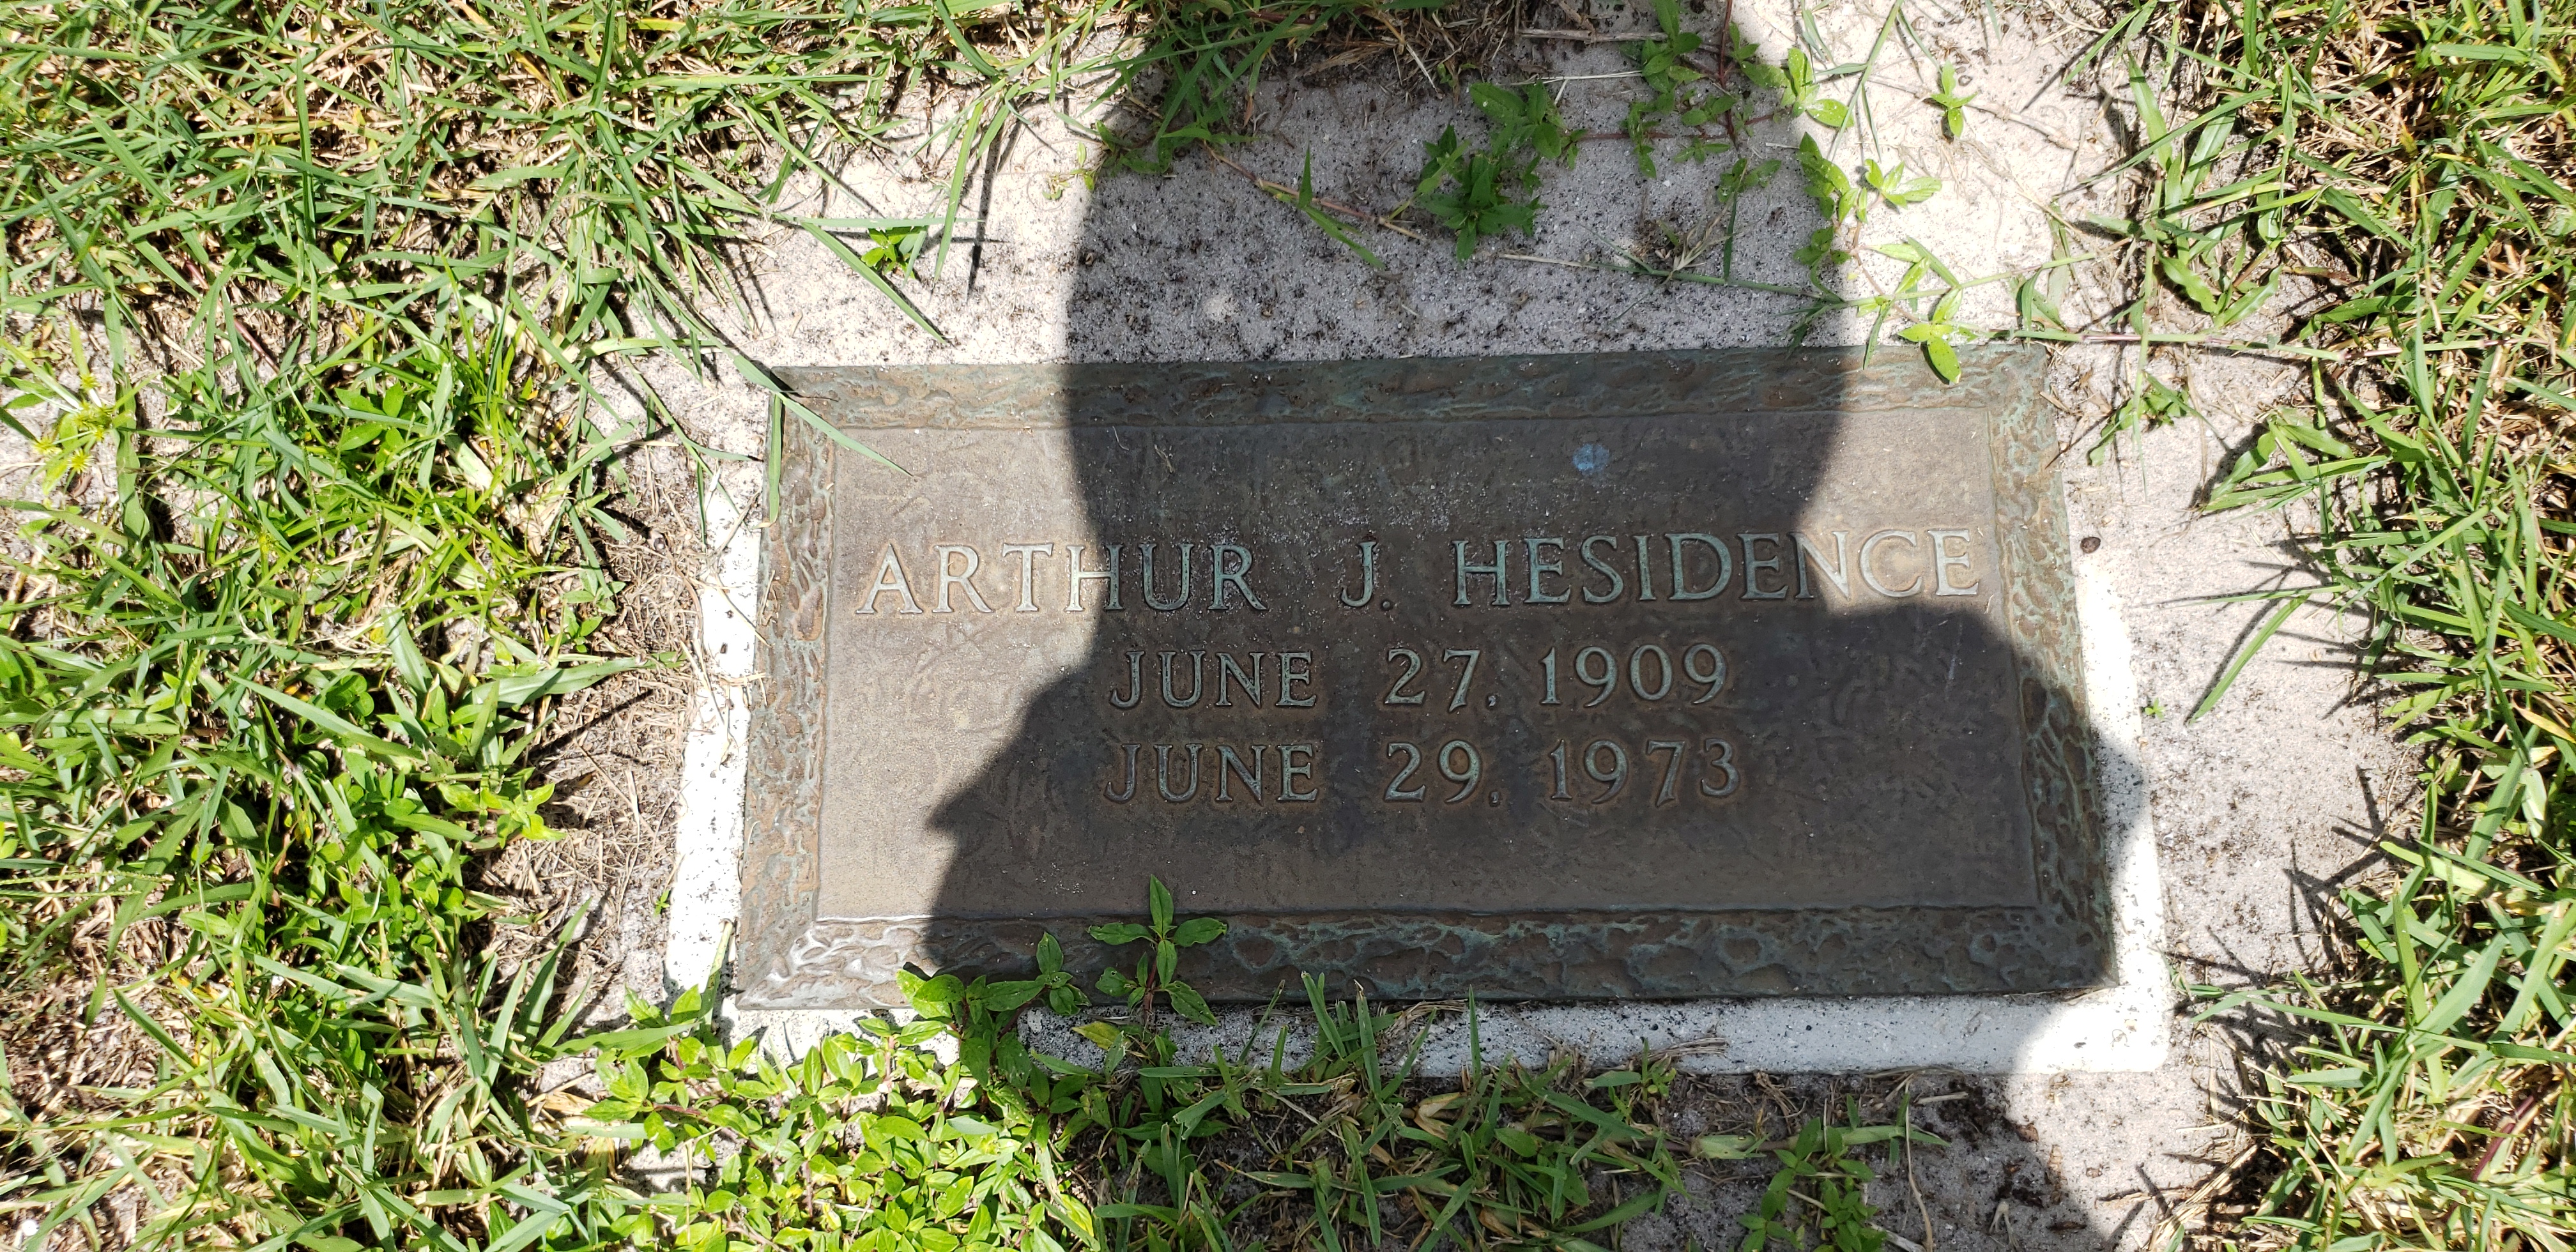 Arthur J Hesidence